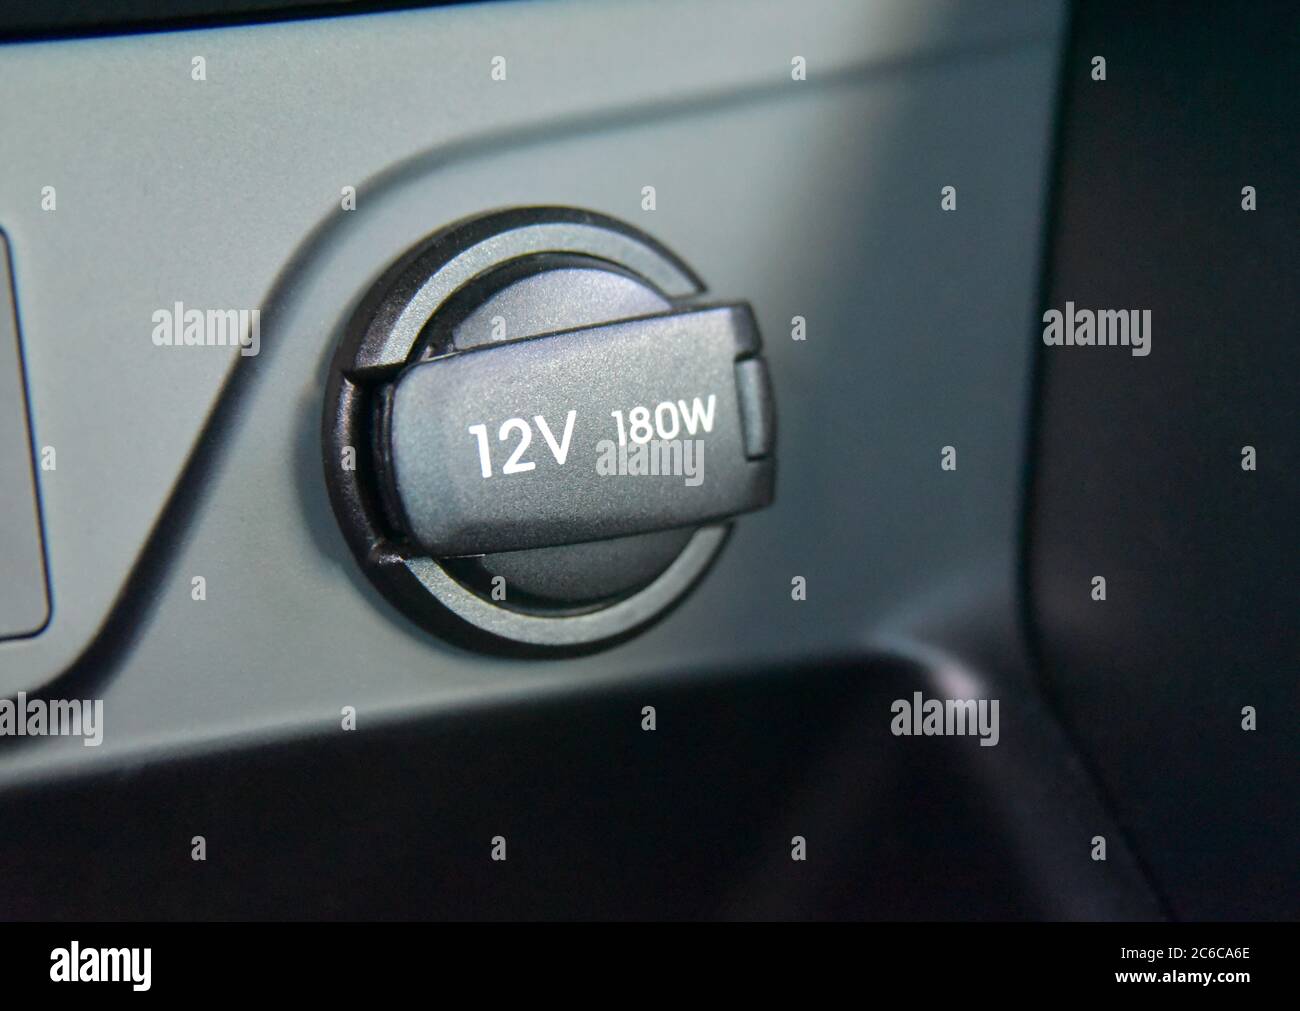 12V Steckdose im Auto Stockfotografie - Alamy